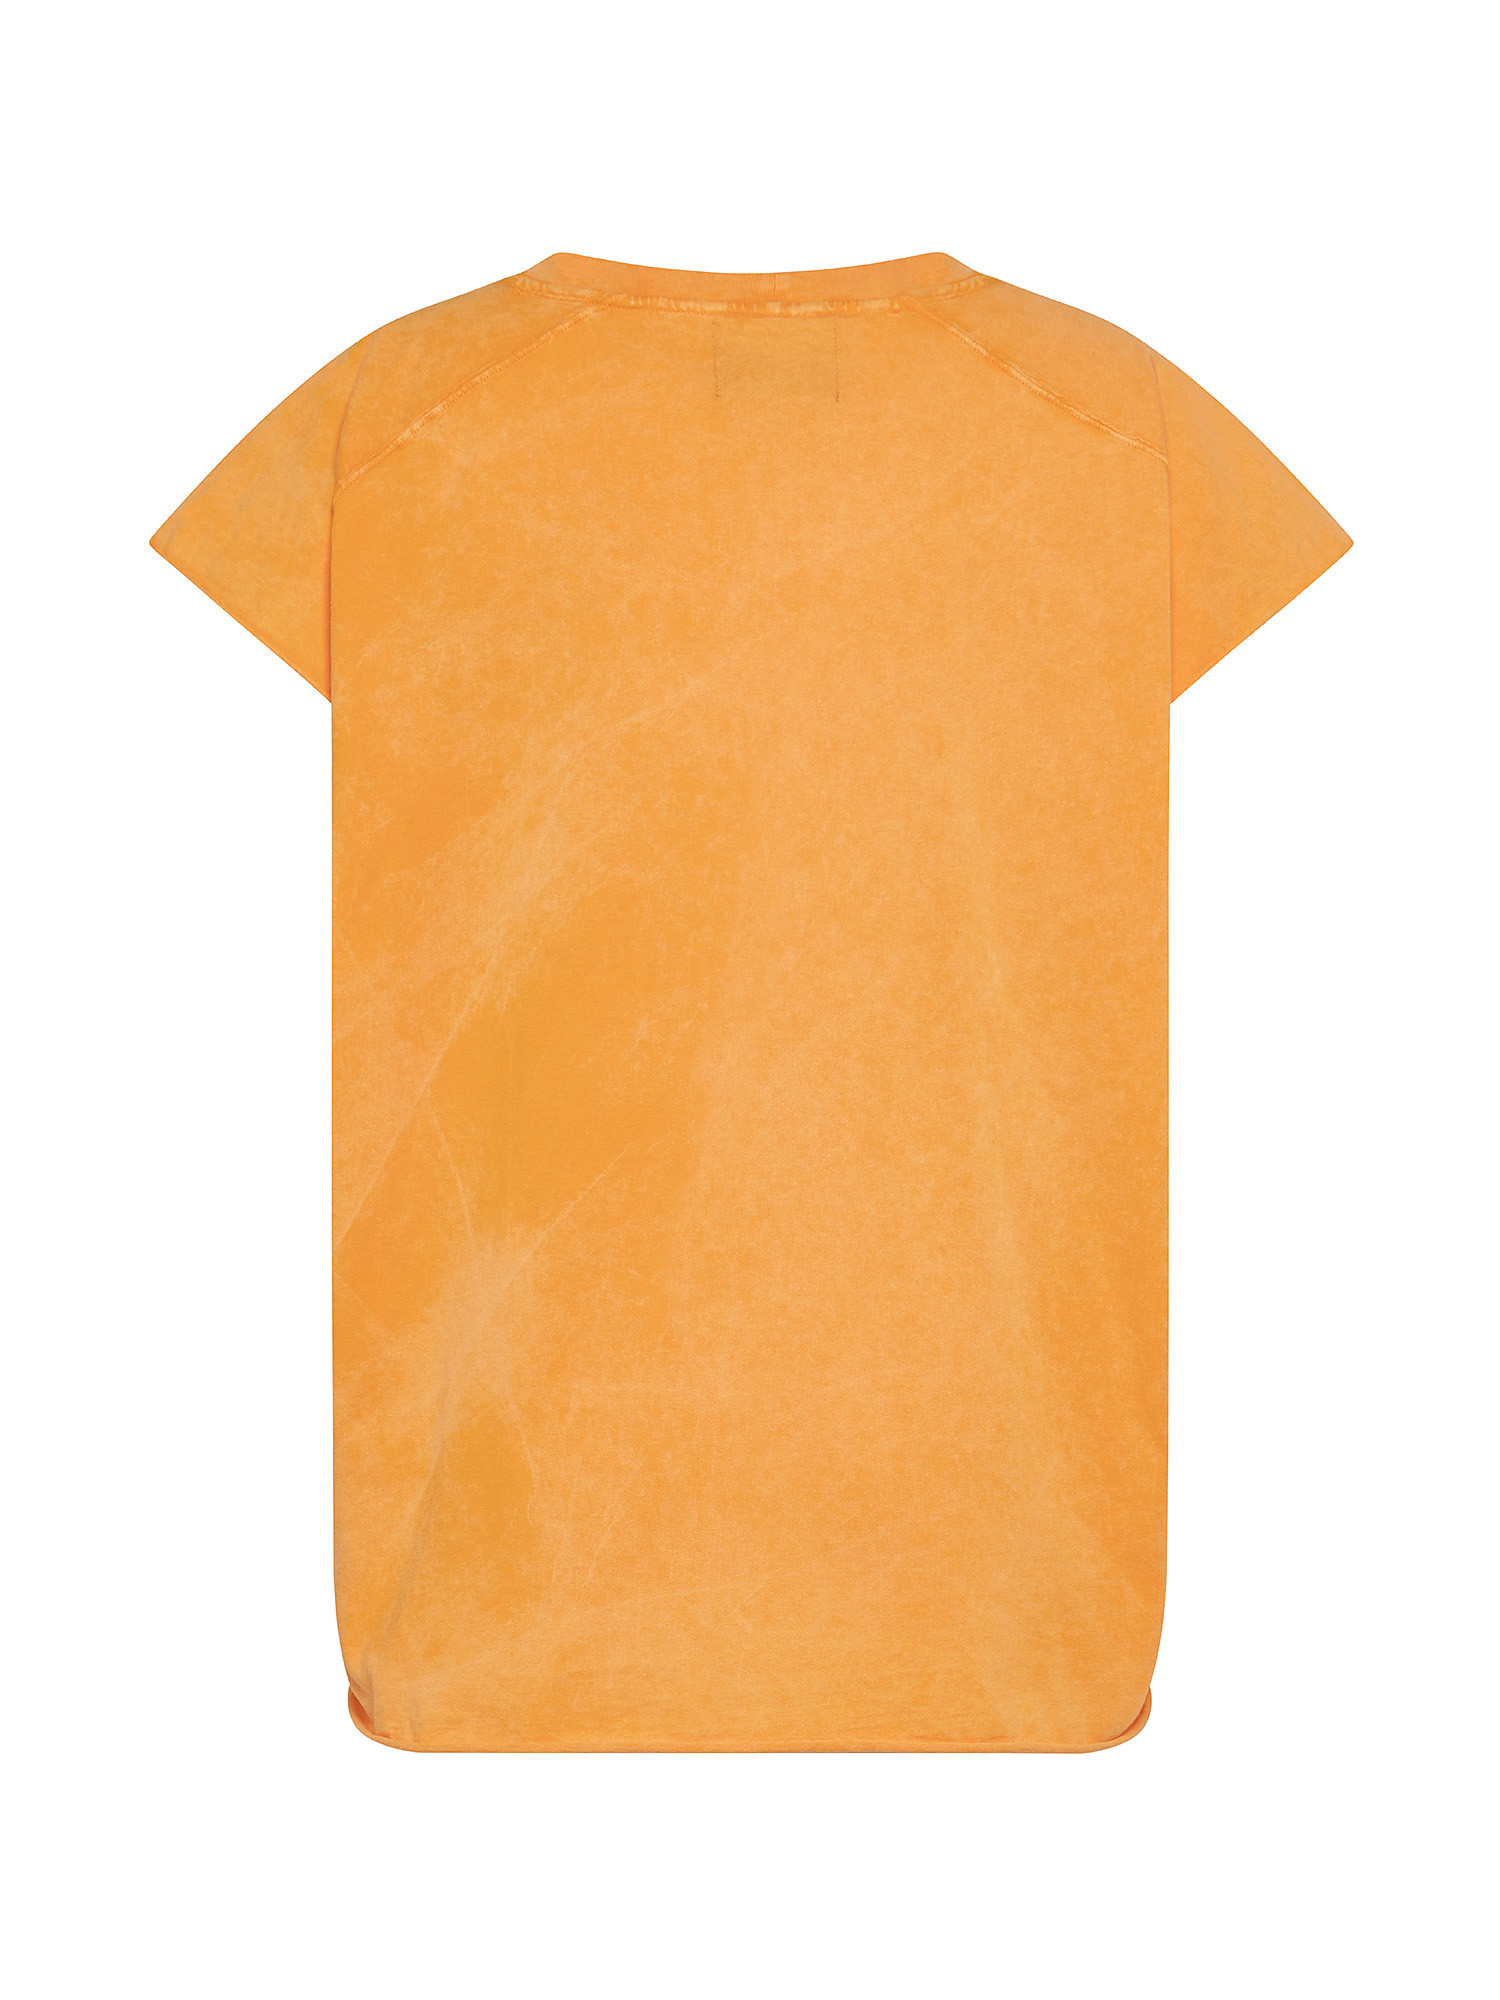 T-shirt, Arancione, large